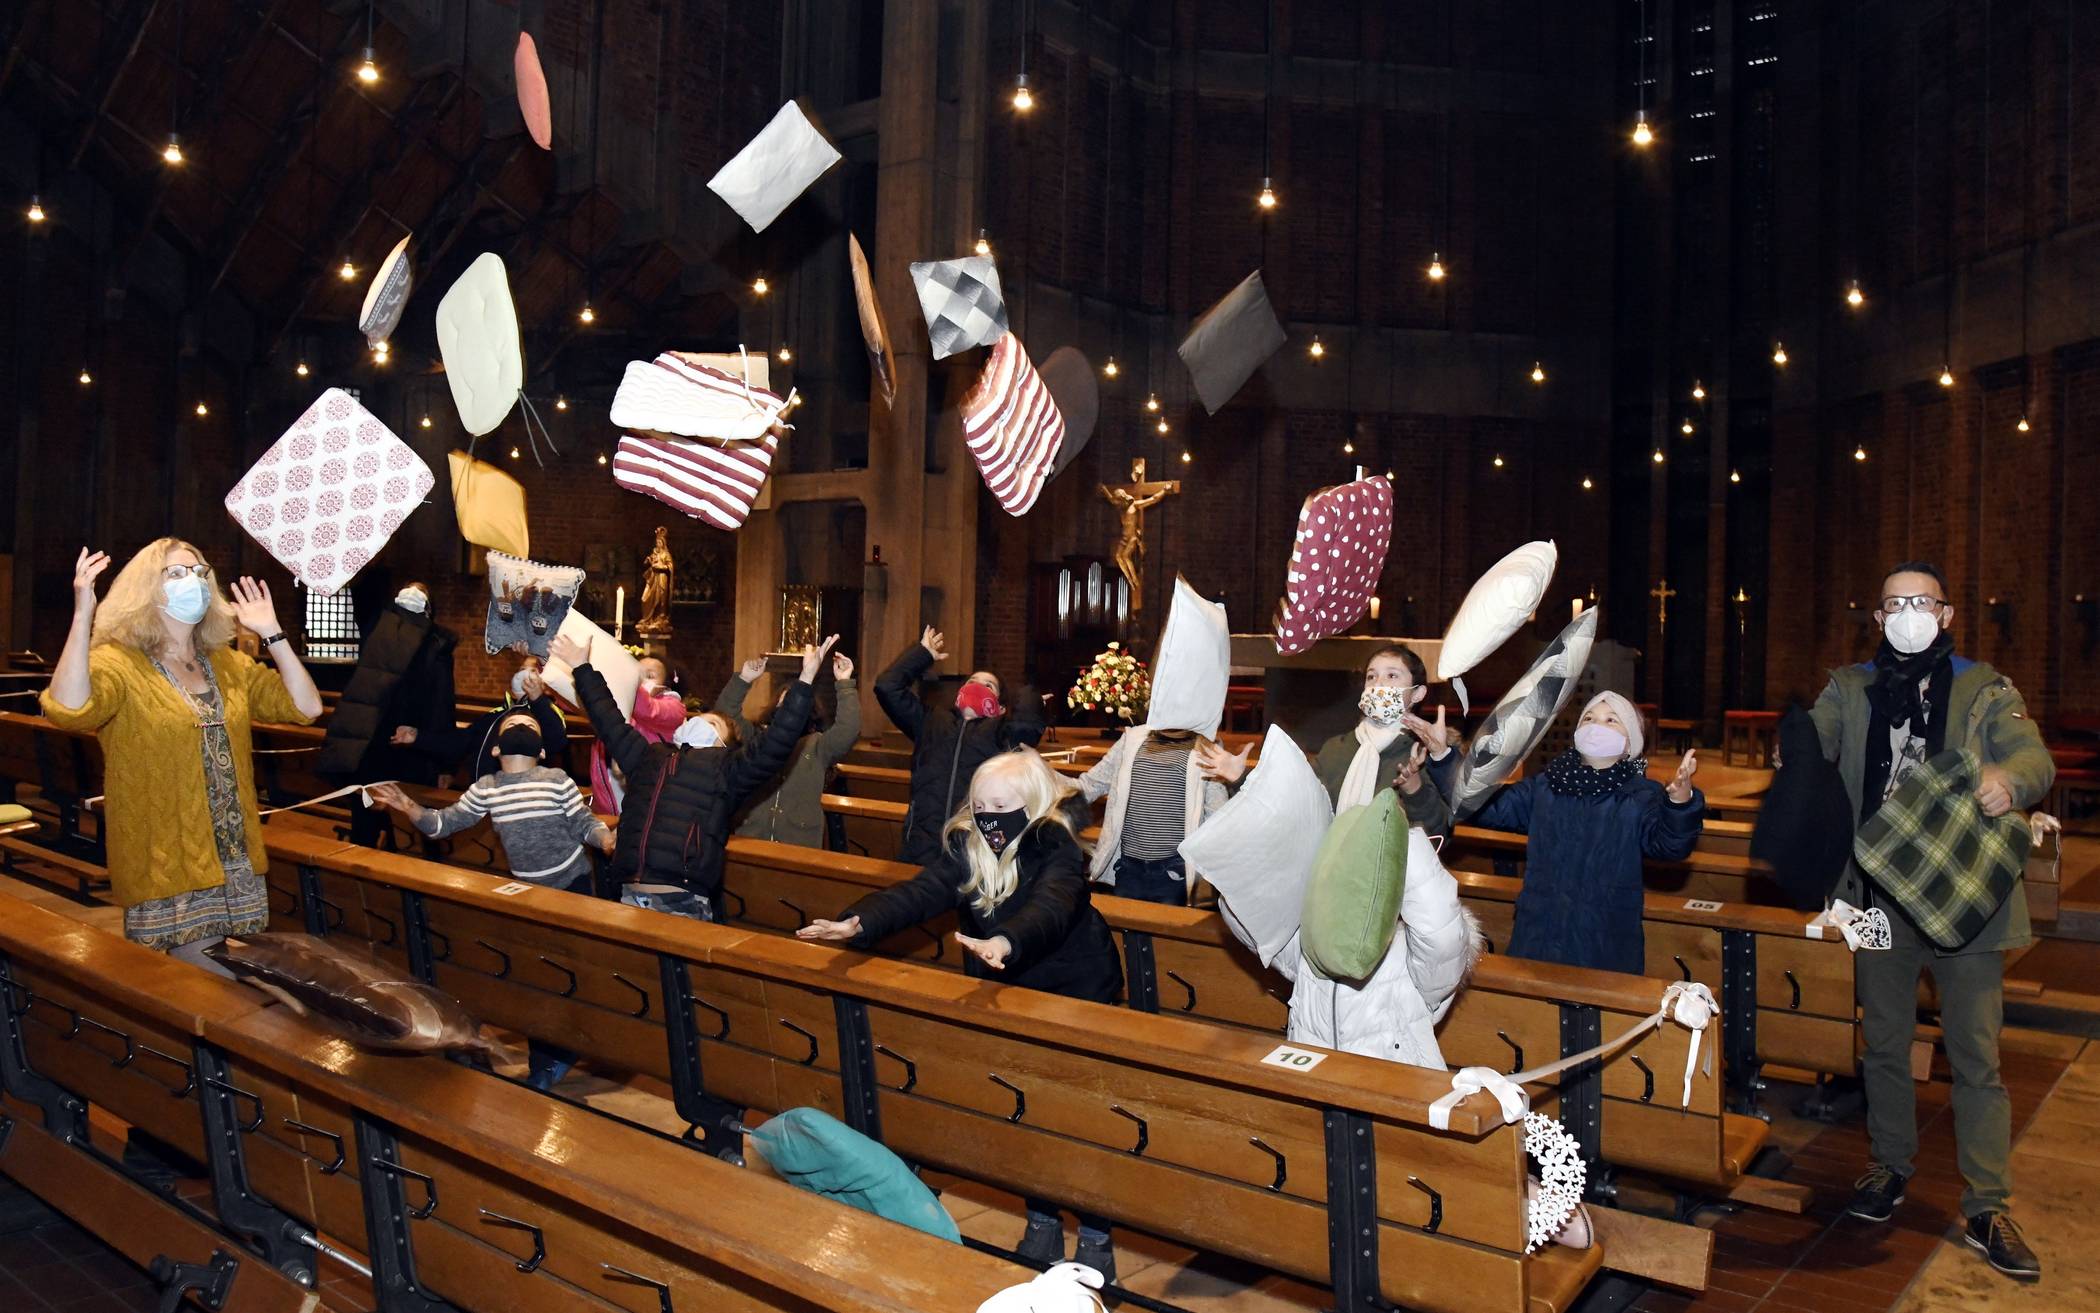 Jede Menge Kissen-Spenden gegen kalte Kirchenbänke